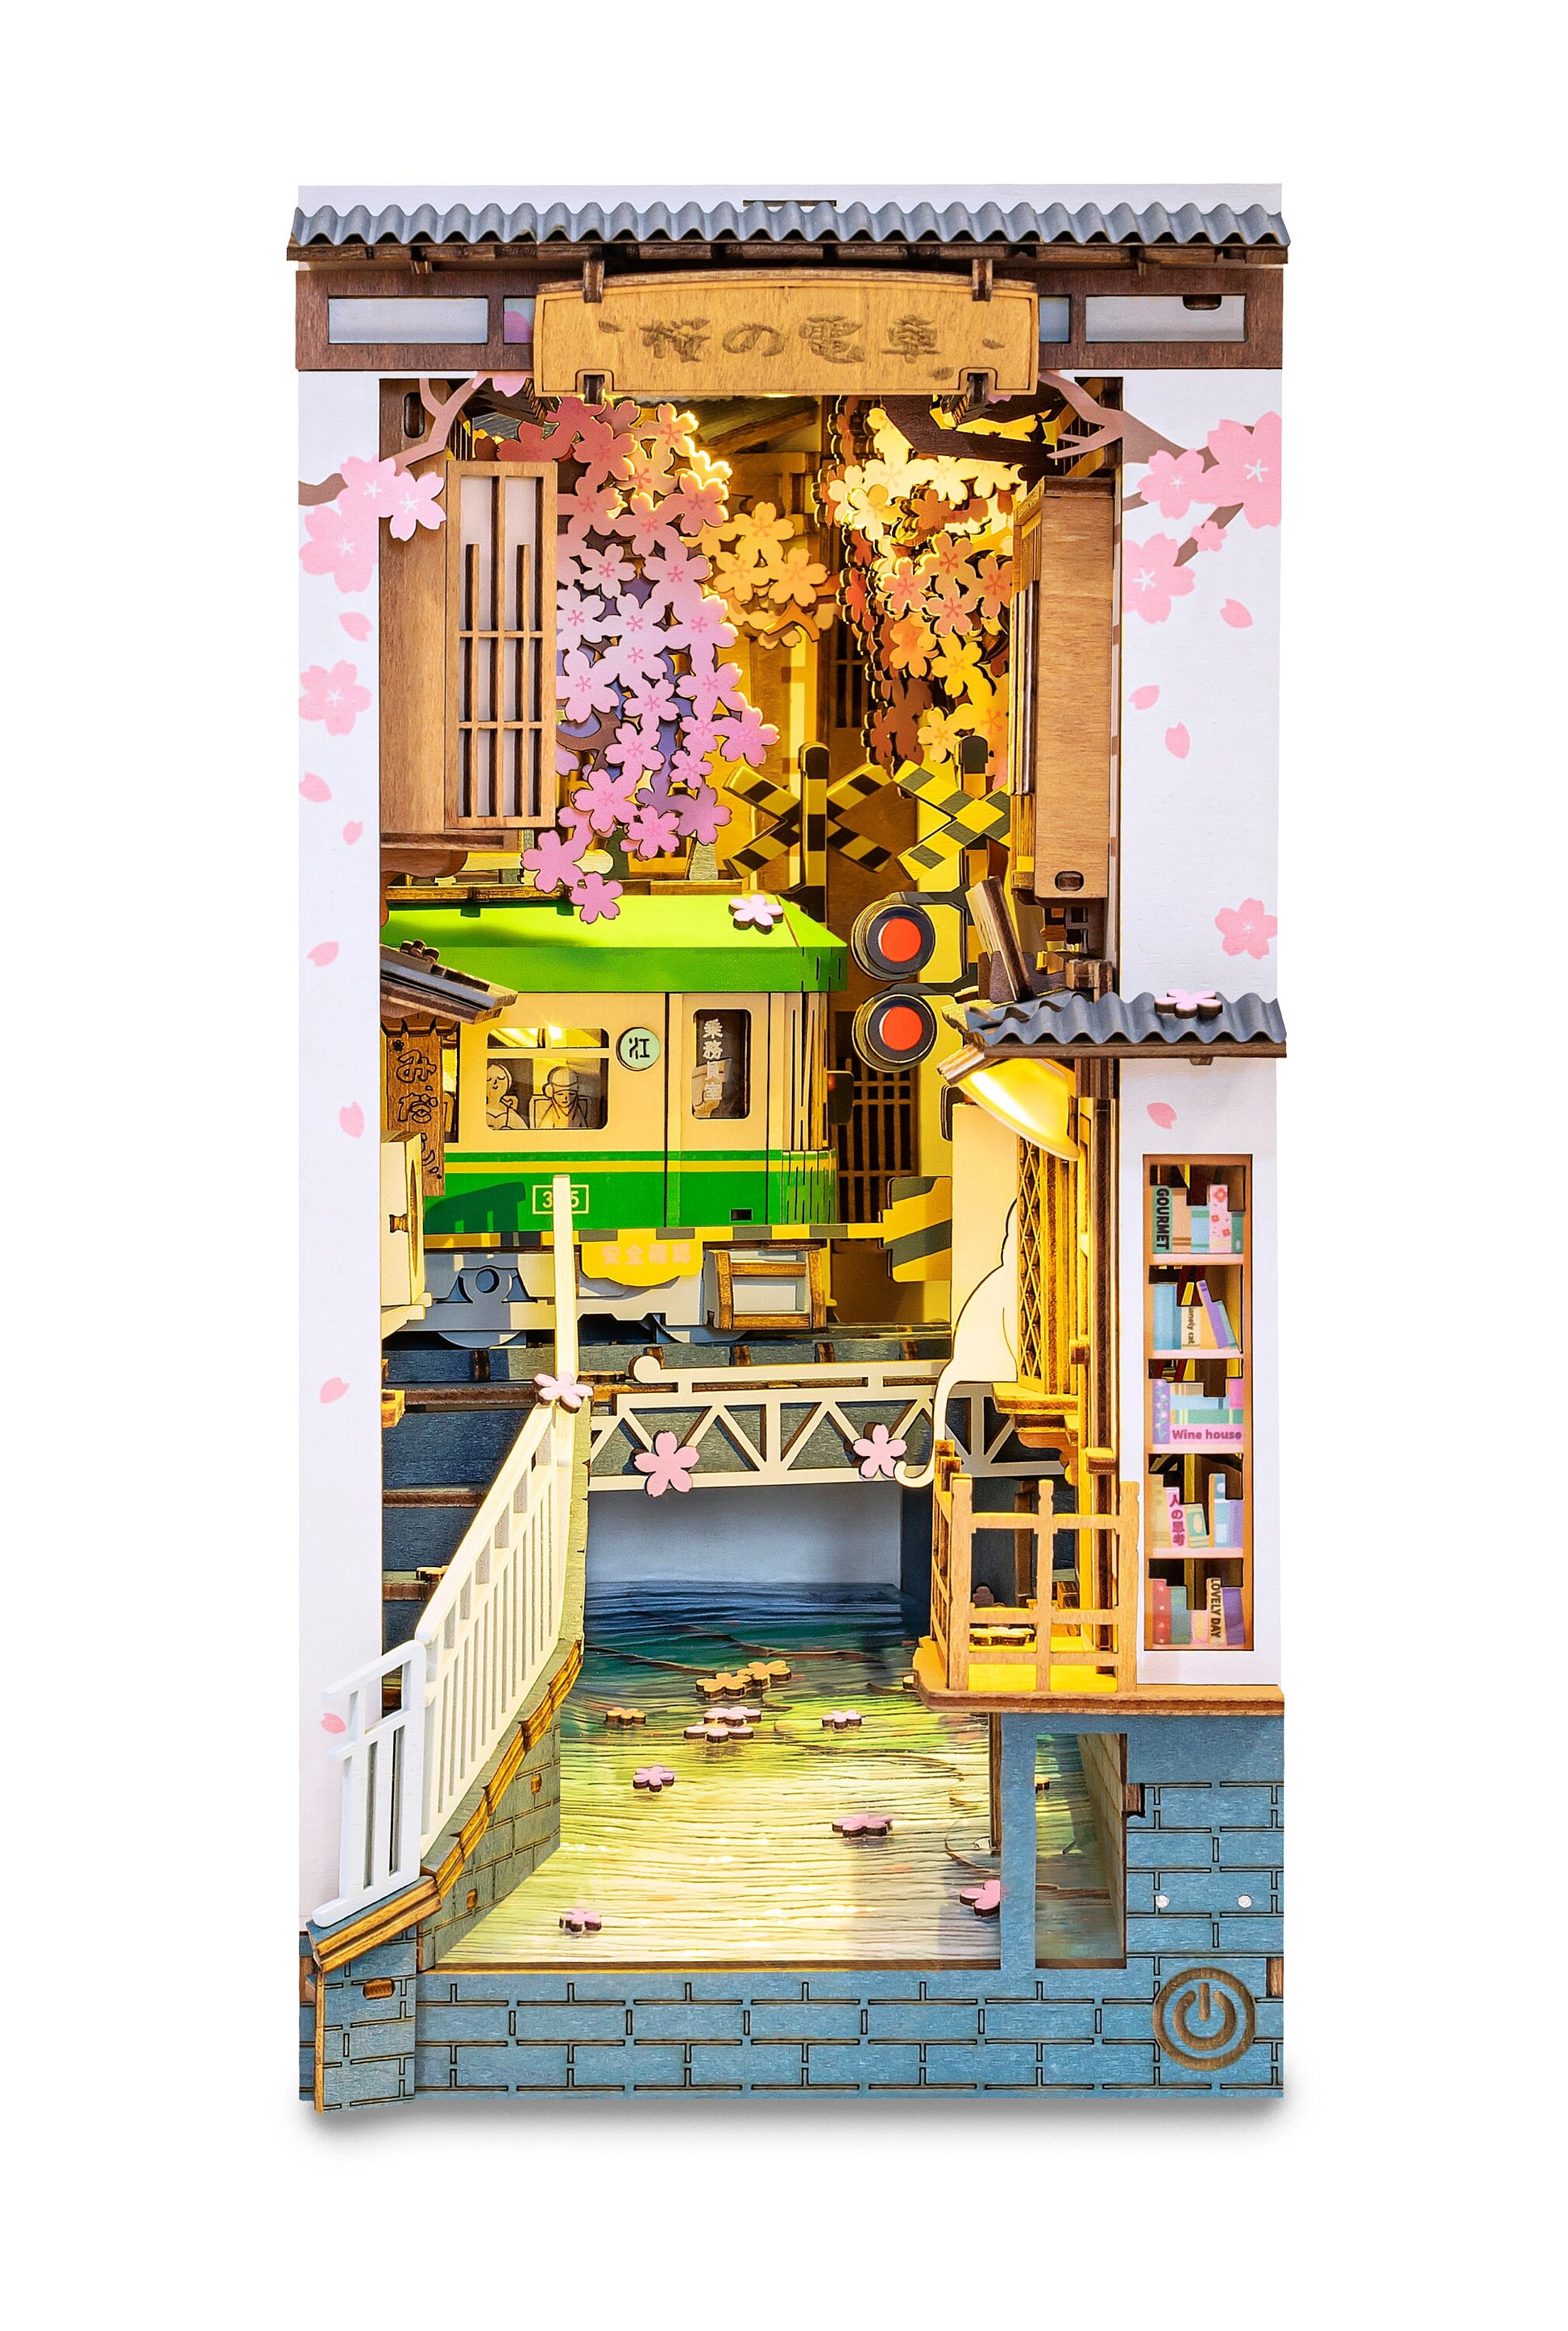 Build Your Own Book Nook, Doll House DIY Kit, Model Set, Miniature Book Nook Craft Kit for Adults, Mini Diorama Room, Sakura Densya